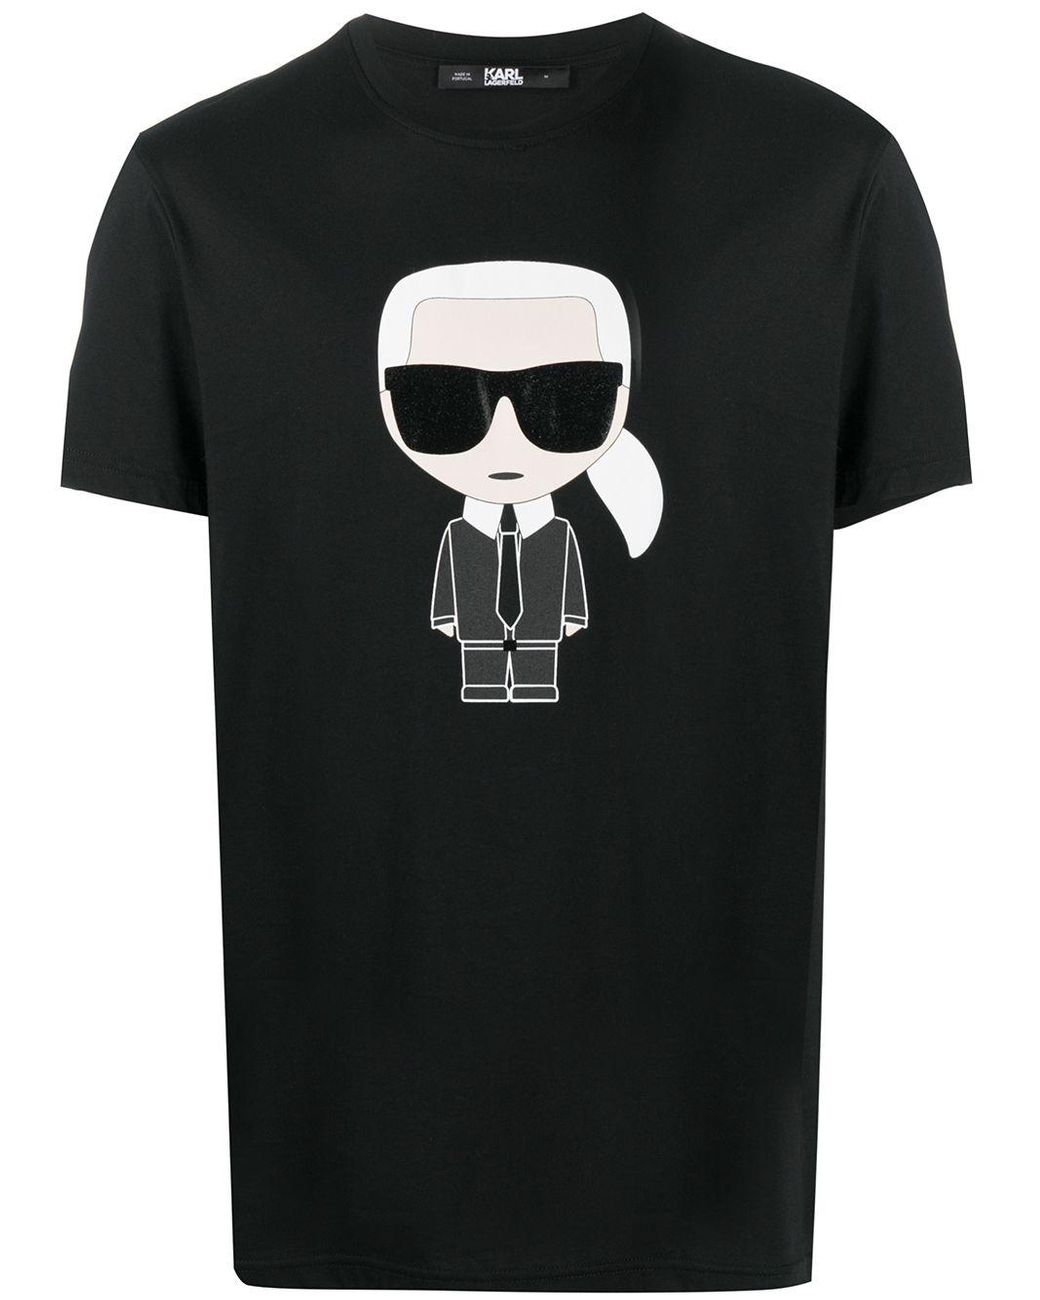 Karl Lagerfeld K/ikonik Organic Cotton T-shirt in Black for Men - Lyst